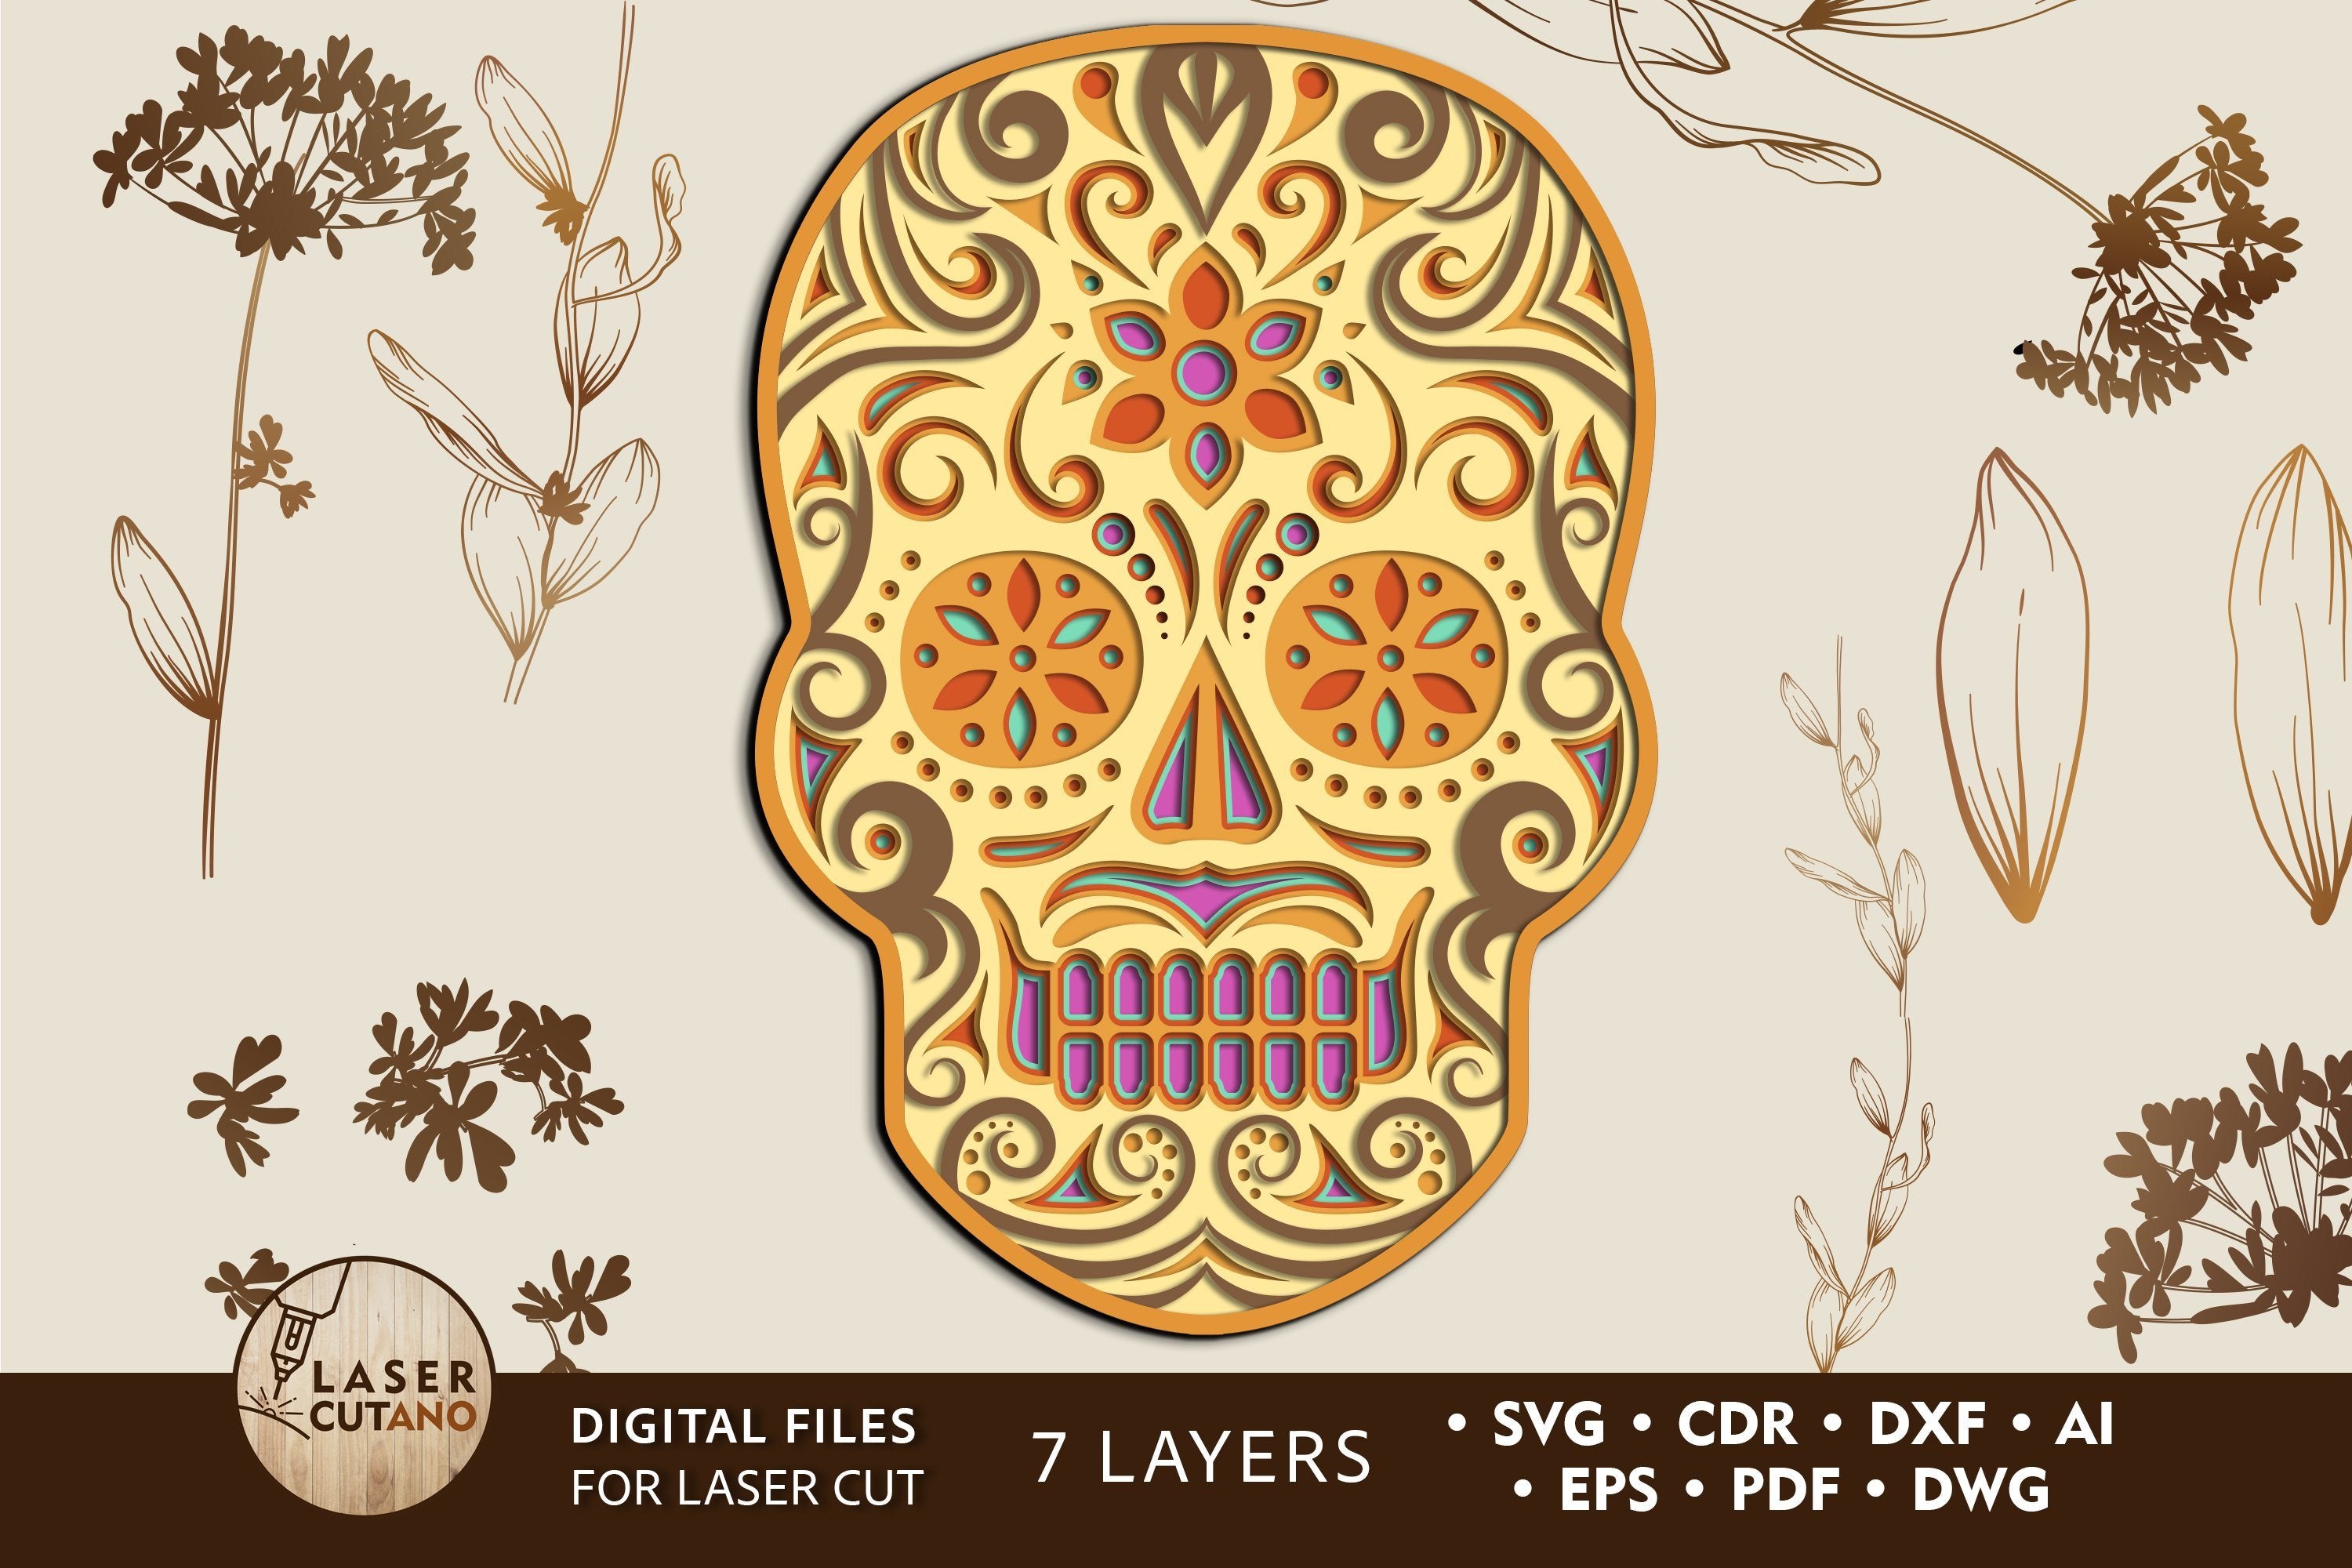 Sugar Skull Clip Art- Set of 12 Colorful Sugar Skulls, PNG, JPG and Vector  Files